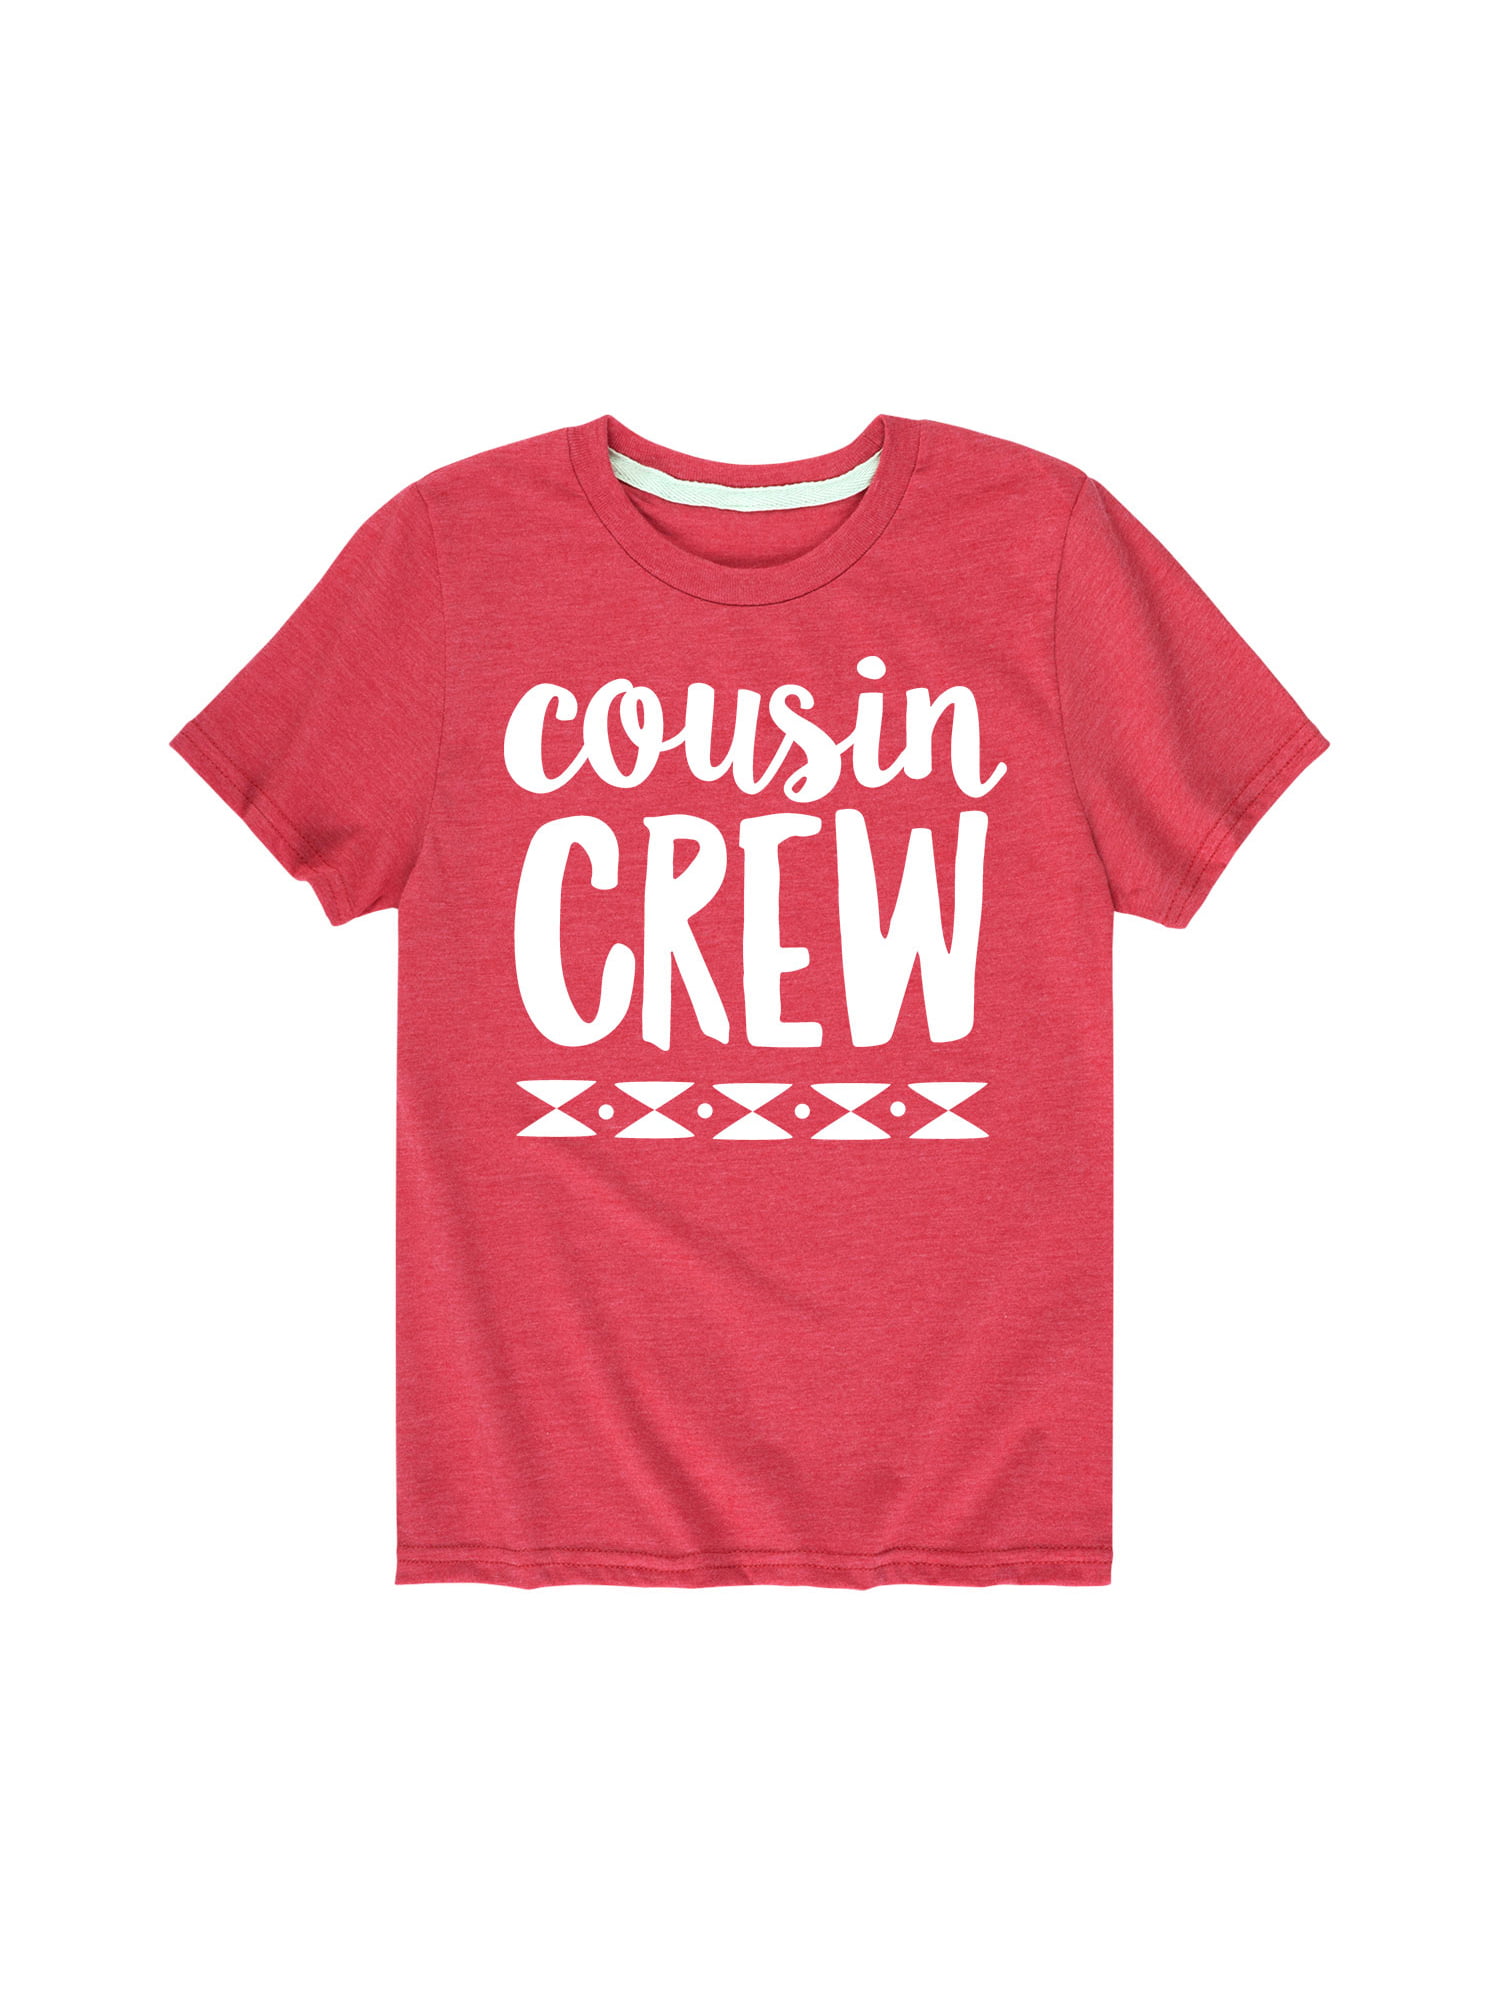 Instant Message - Cousin Crew - Toddler Short Sleeve T-Shirt - Walmart.com